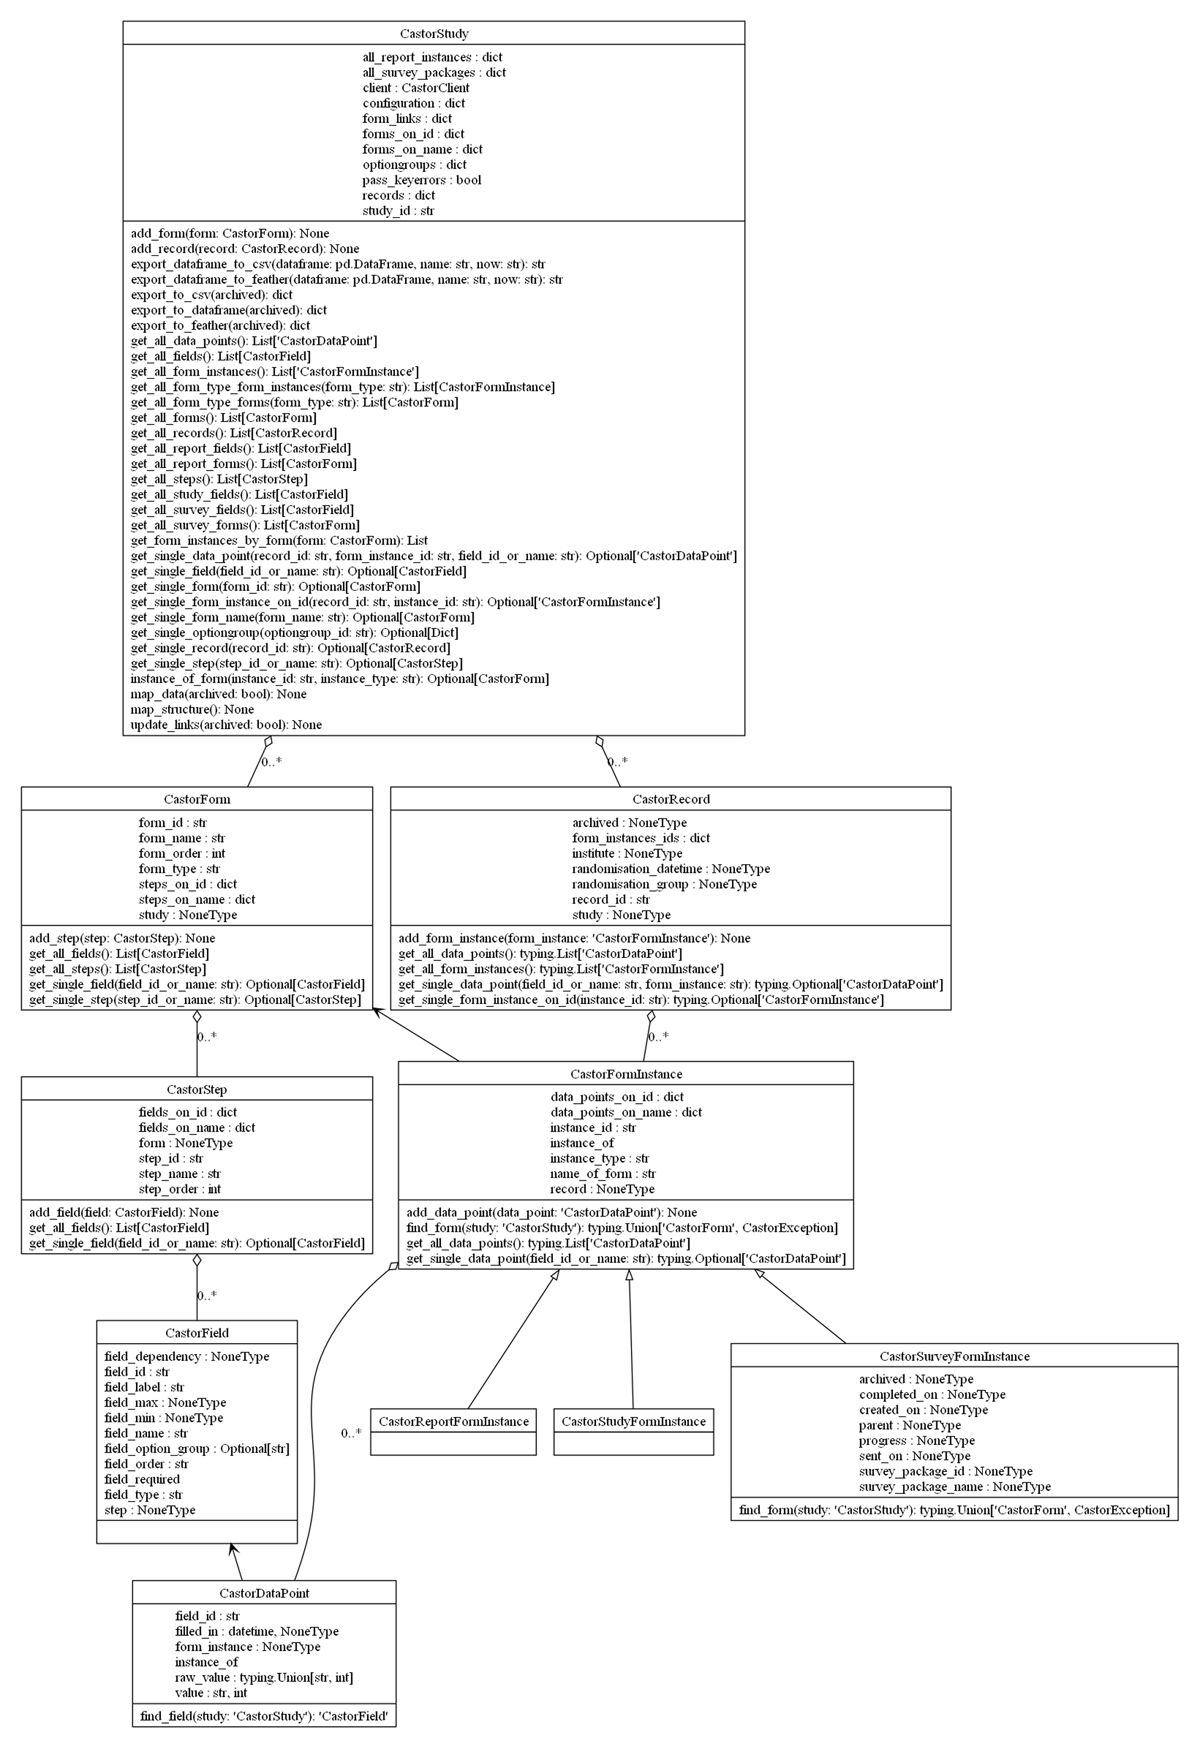 Unified modelling language (UML) diagram of the CastorStudy implementation